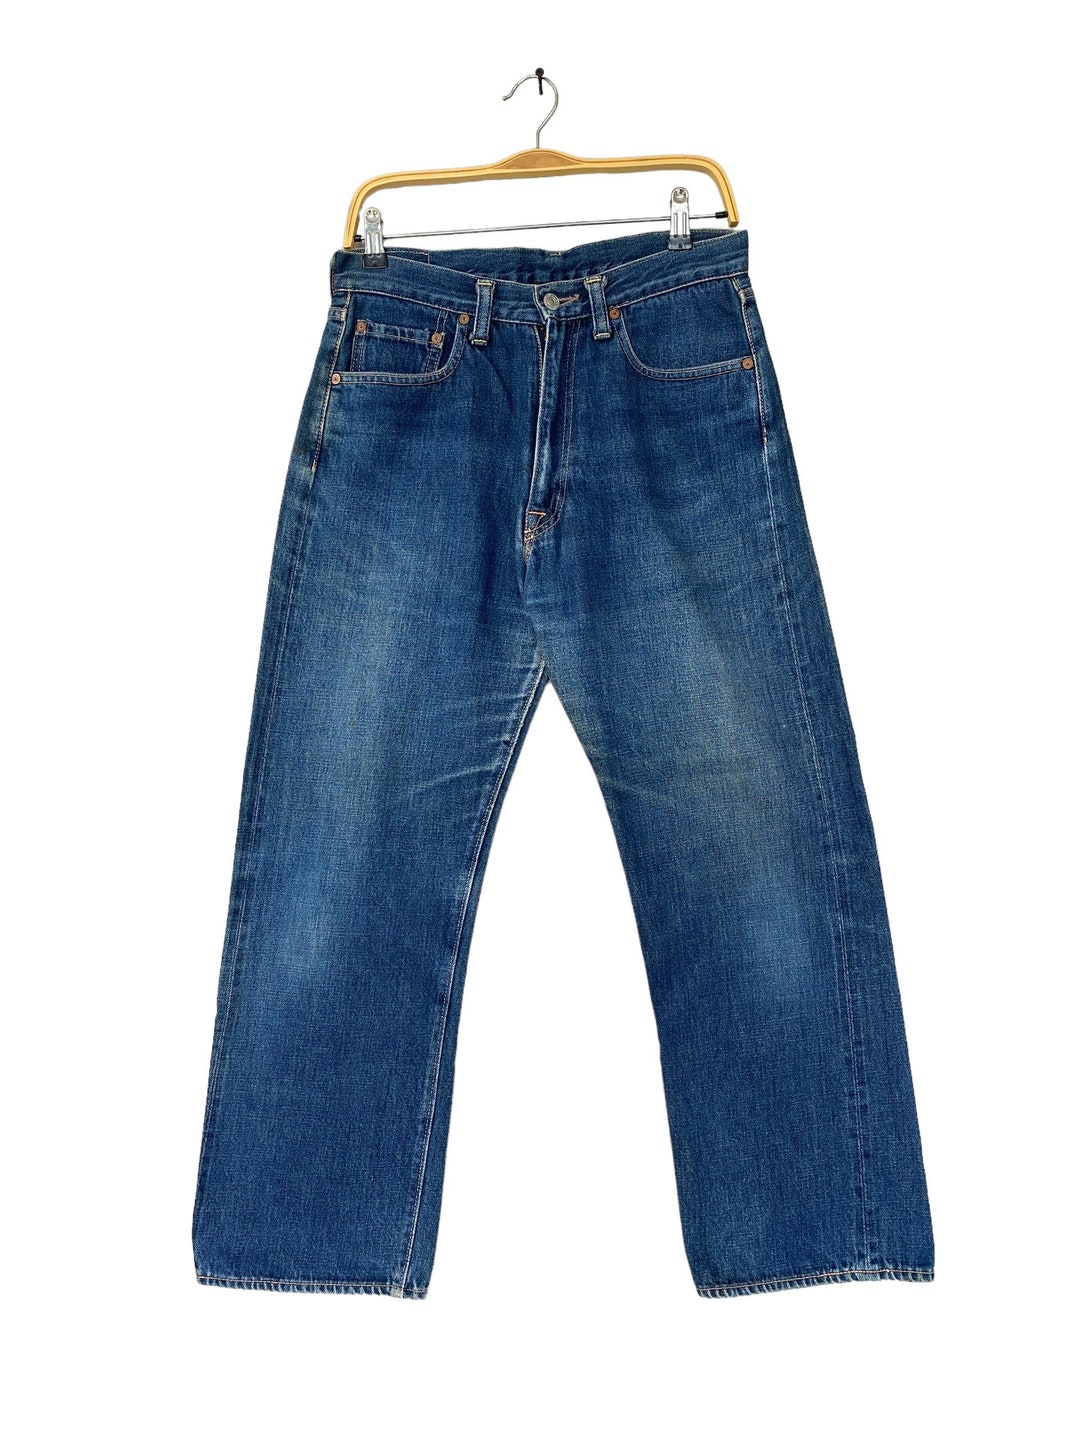 Vintage Japanese Brand Denime Blue Faded Jeans Selvedge - Etsy